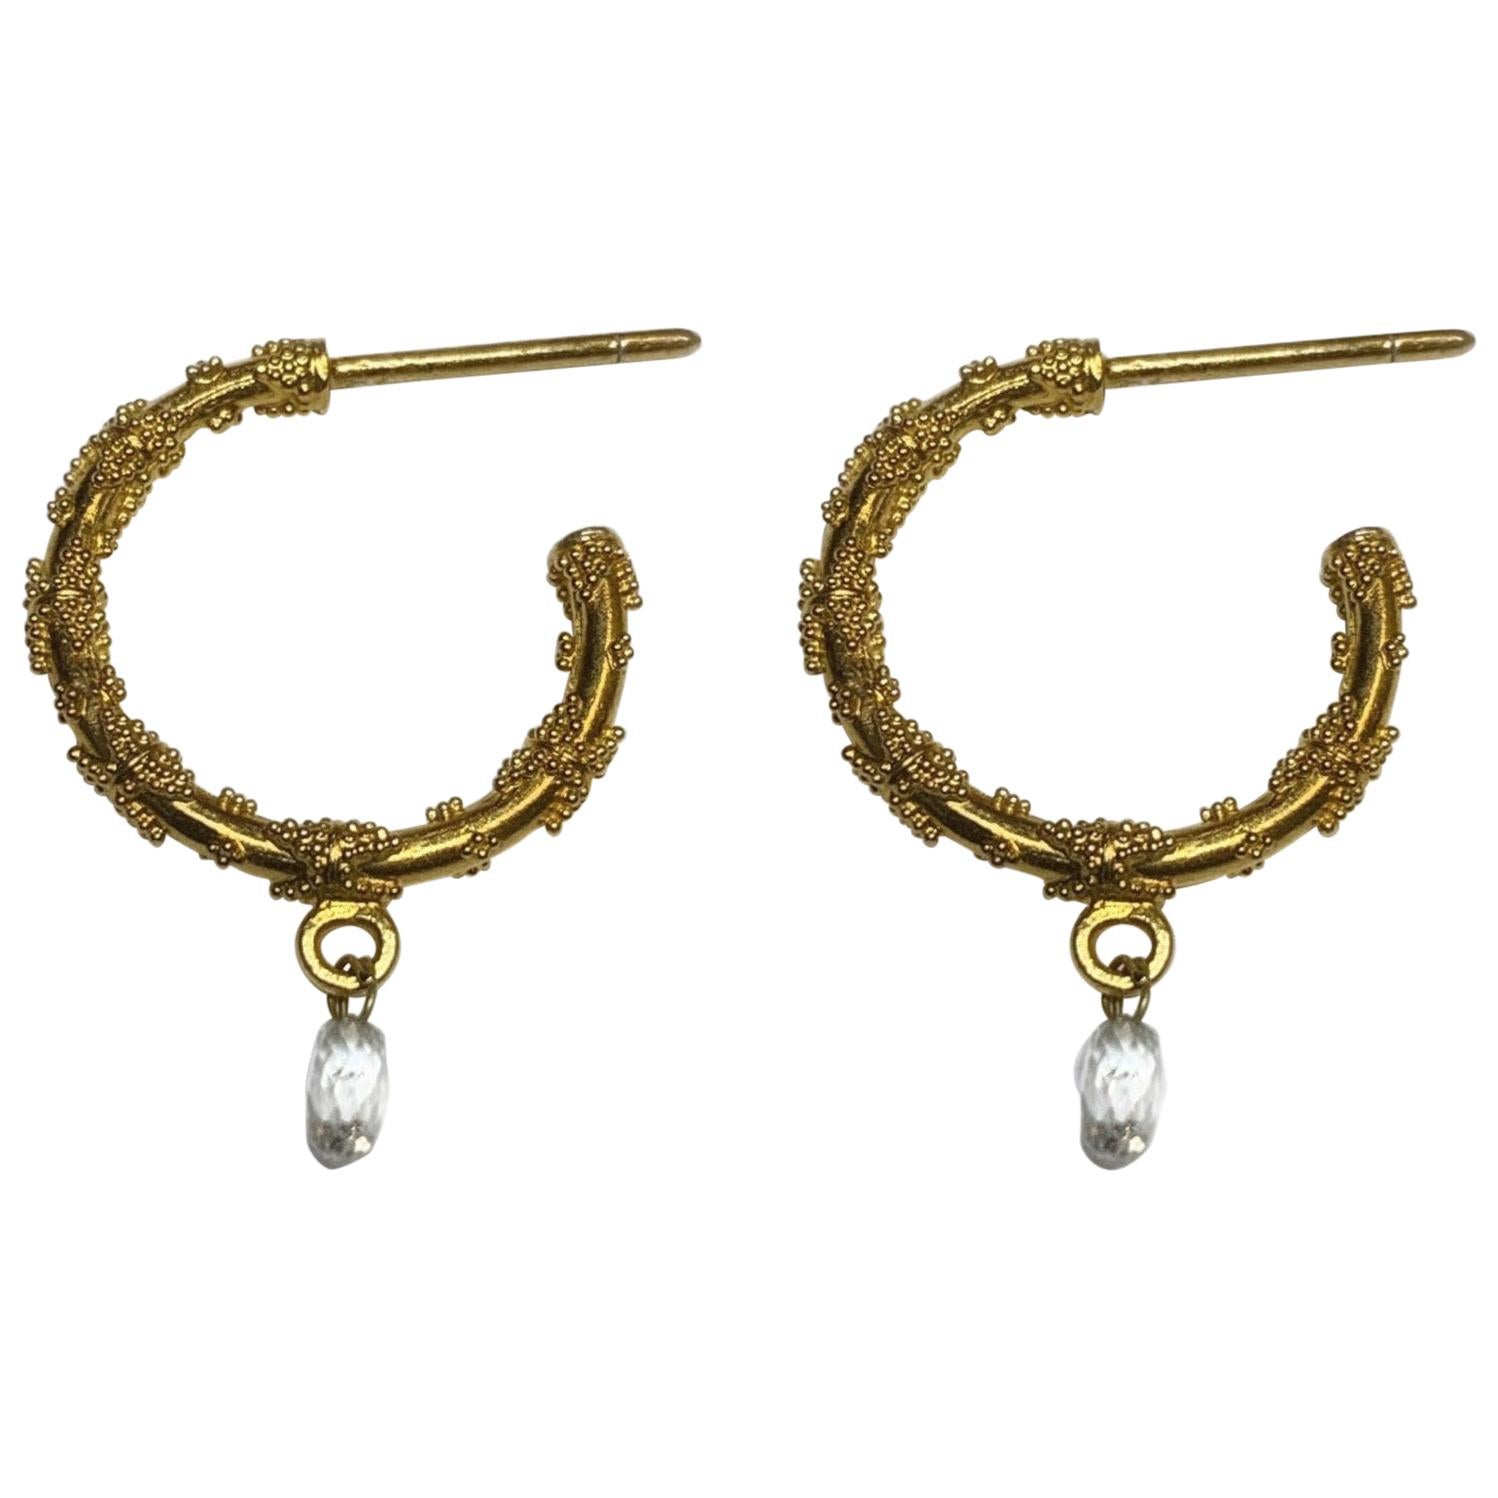 Bali Jewelry - 7 For Sale on 1stDibs